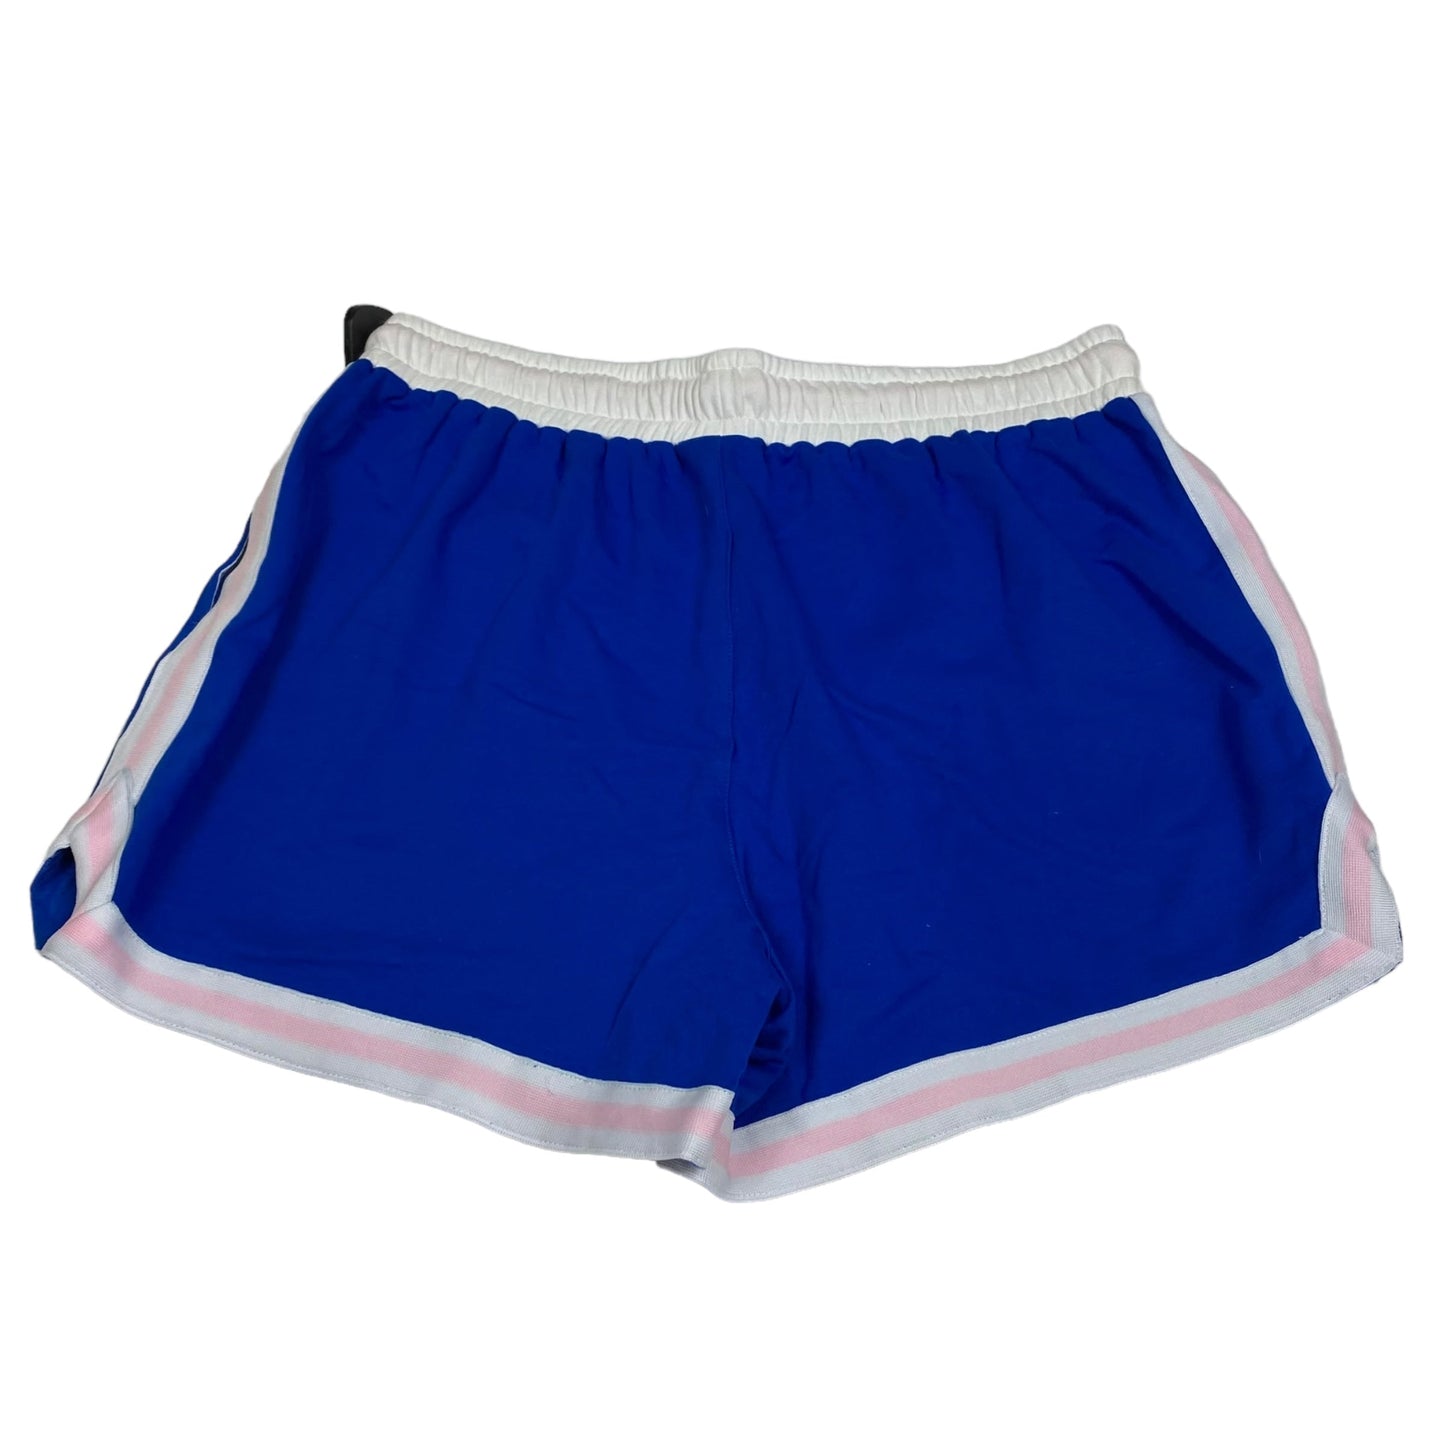 Shorts By En.es  Size: 2x